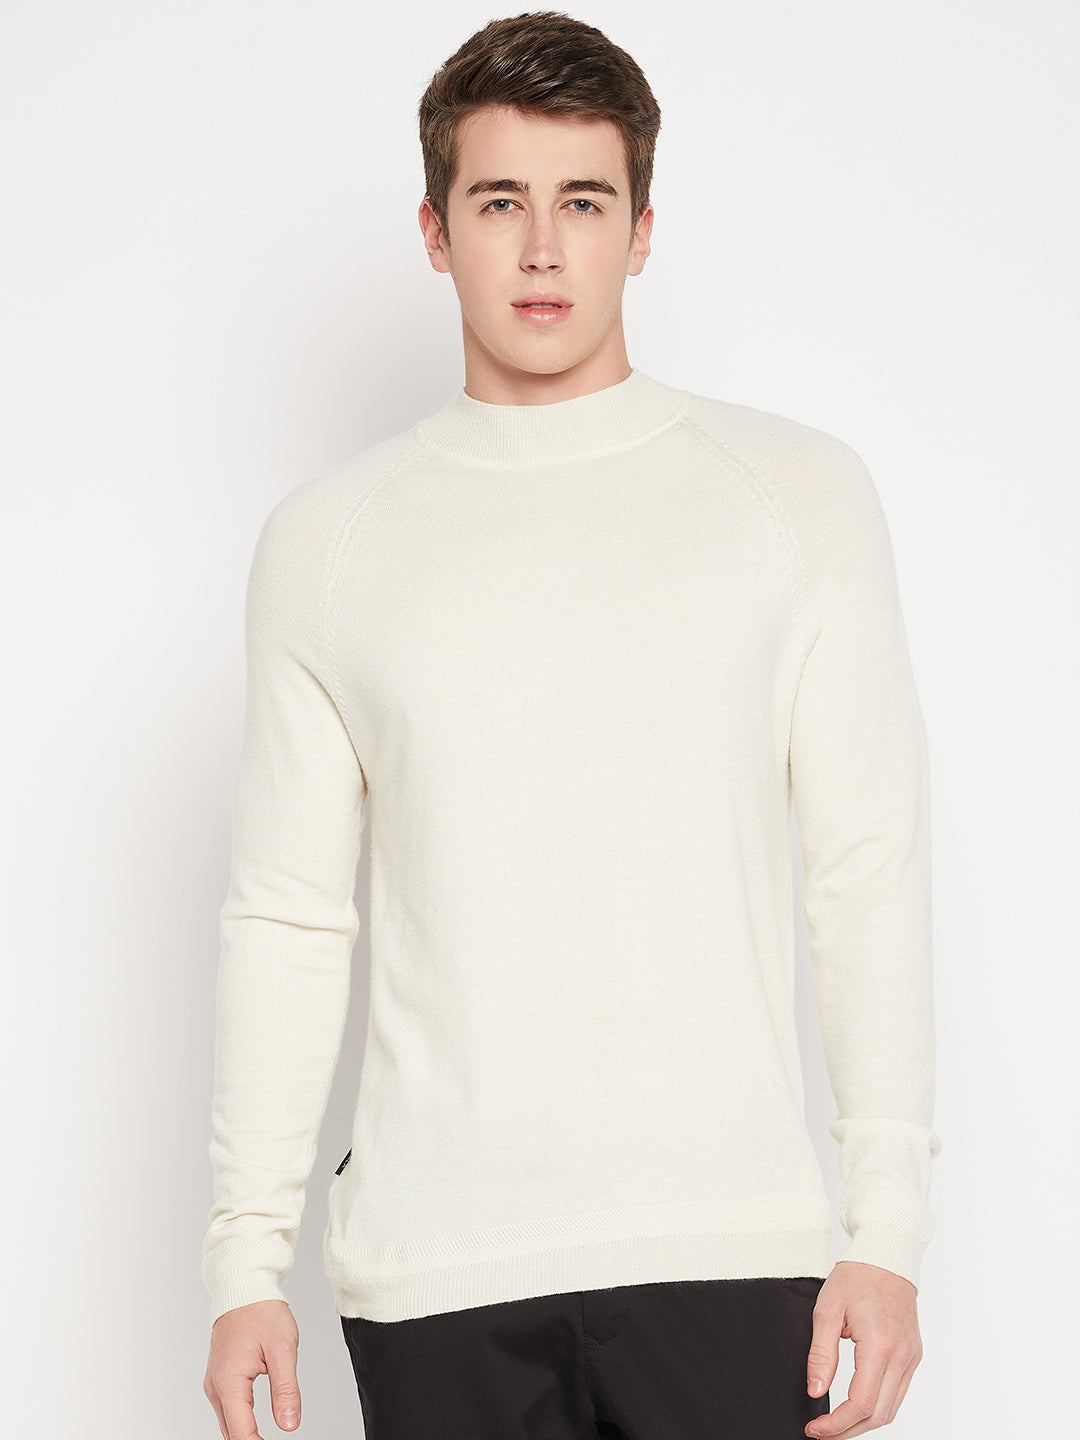 Camla Barcelona Off White Sweater For Men